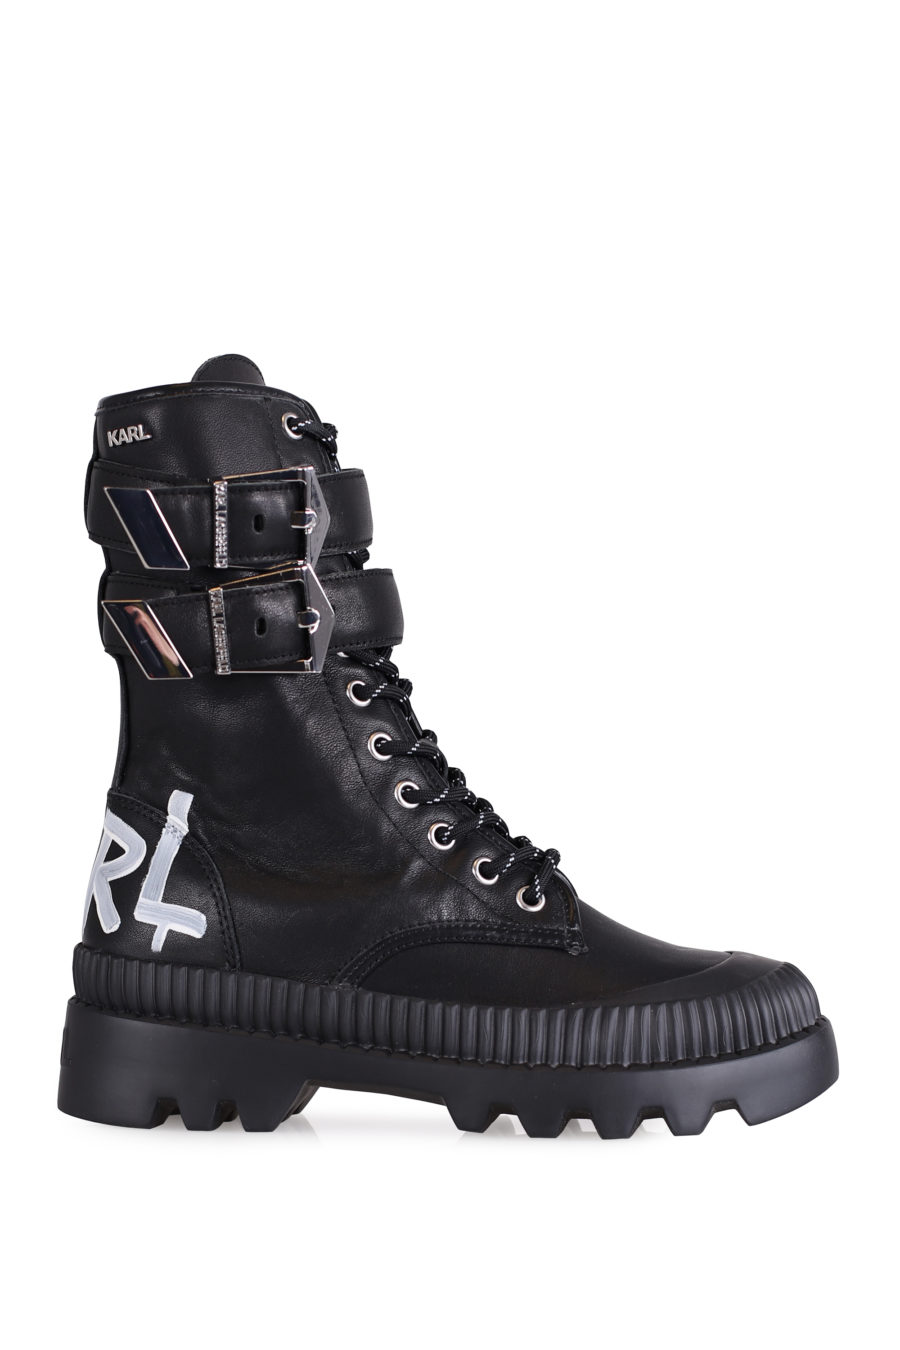 Trekka" boots in black with logo - IMG 0733